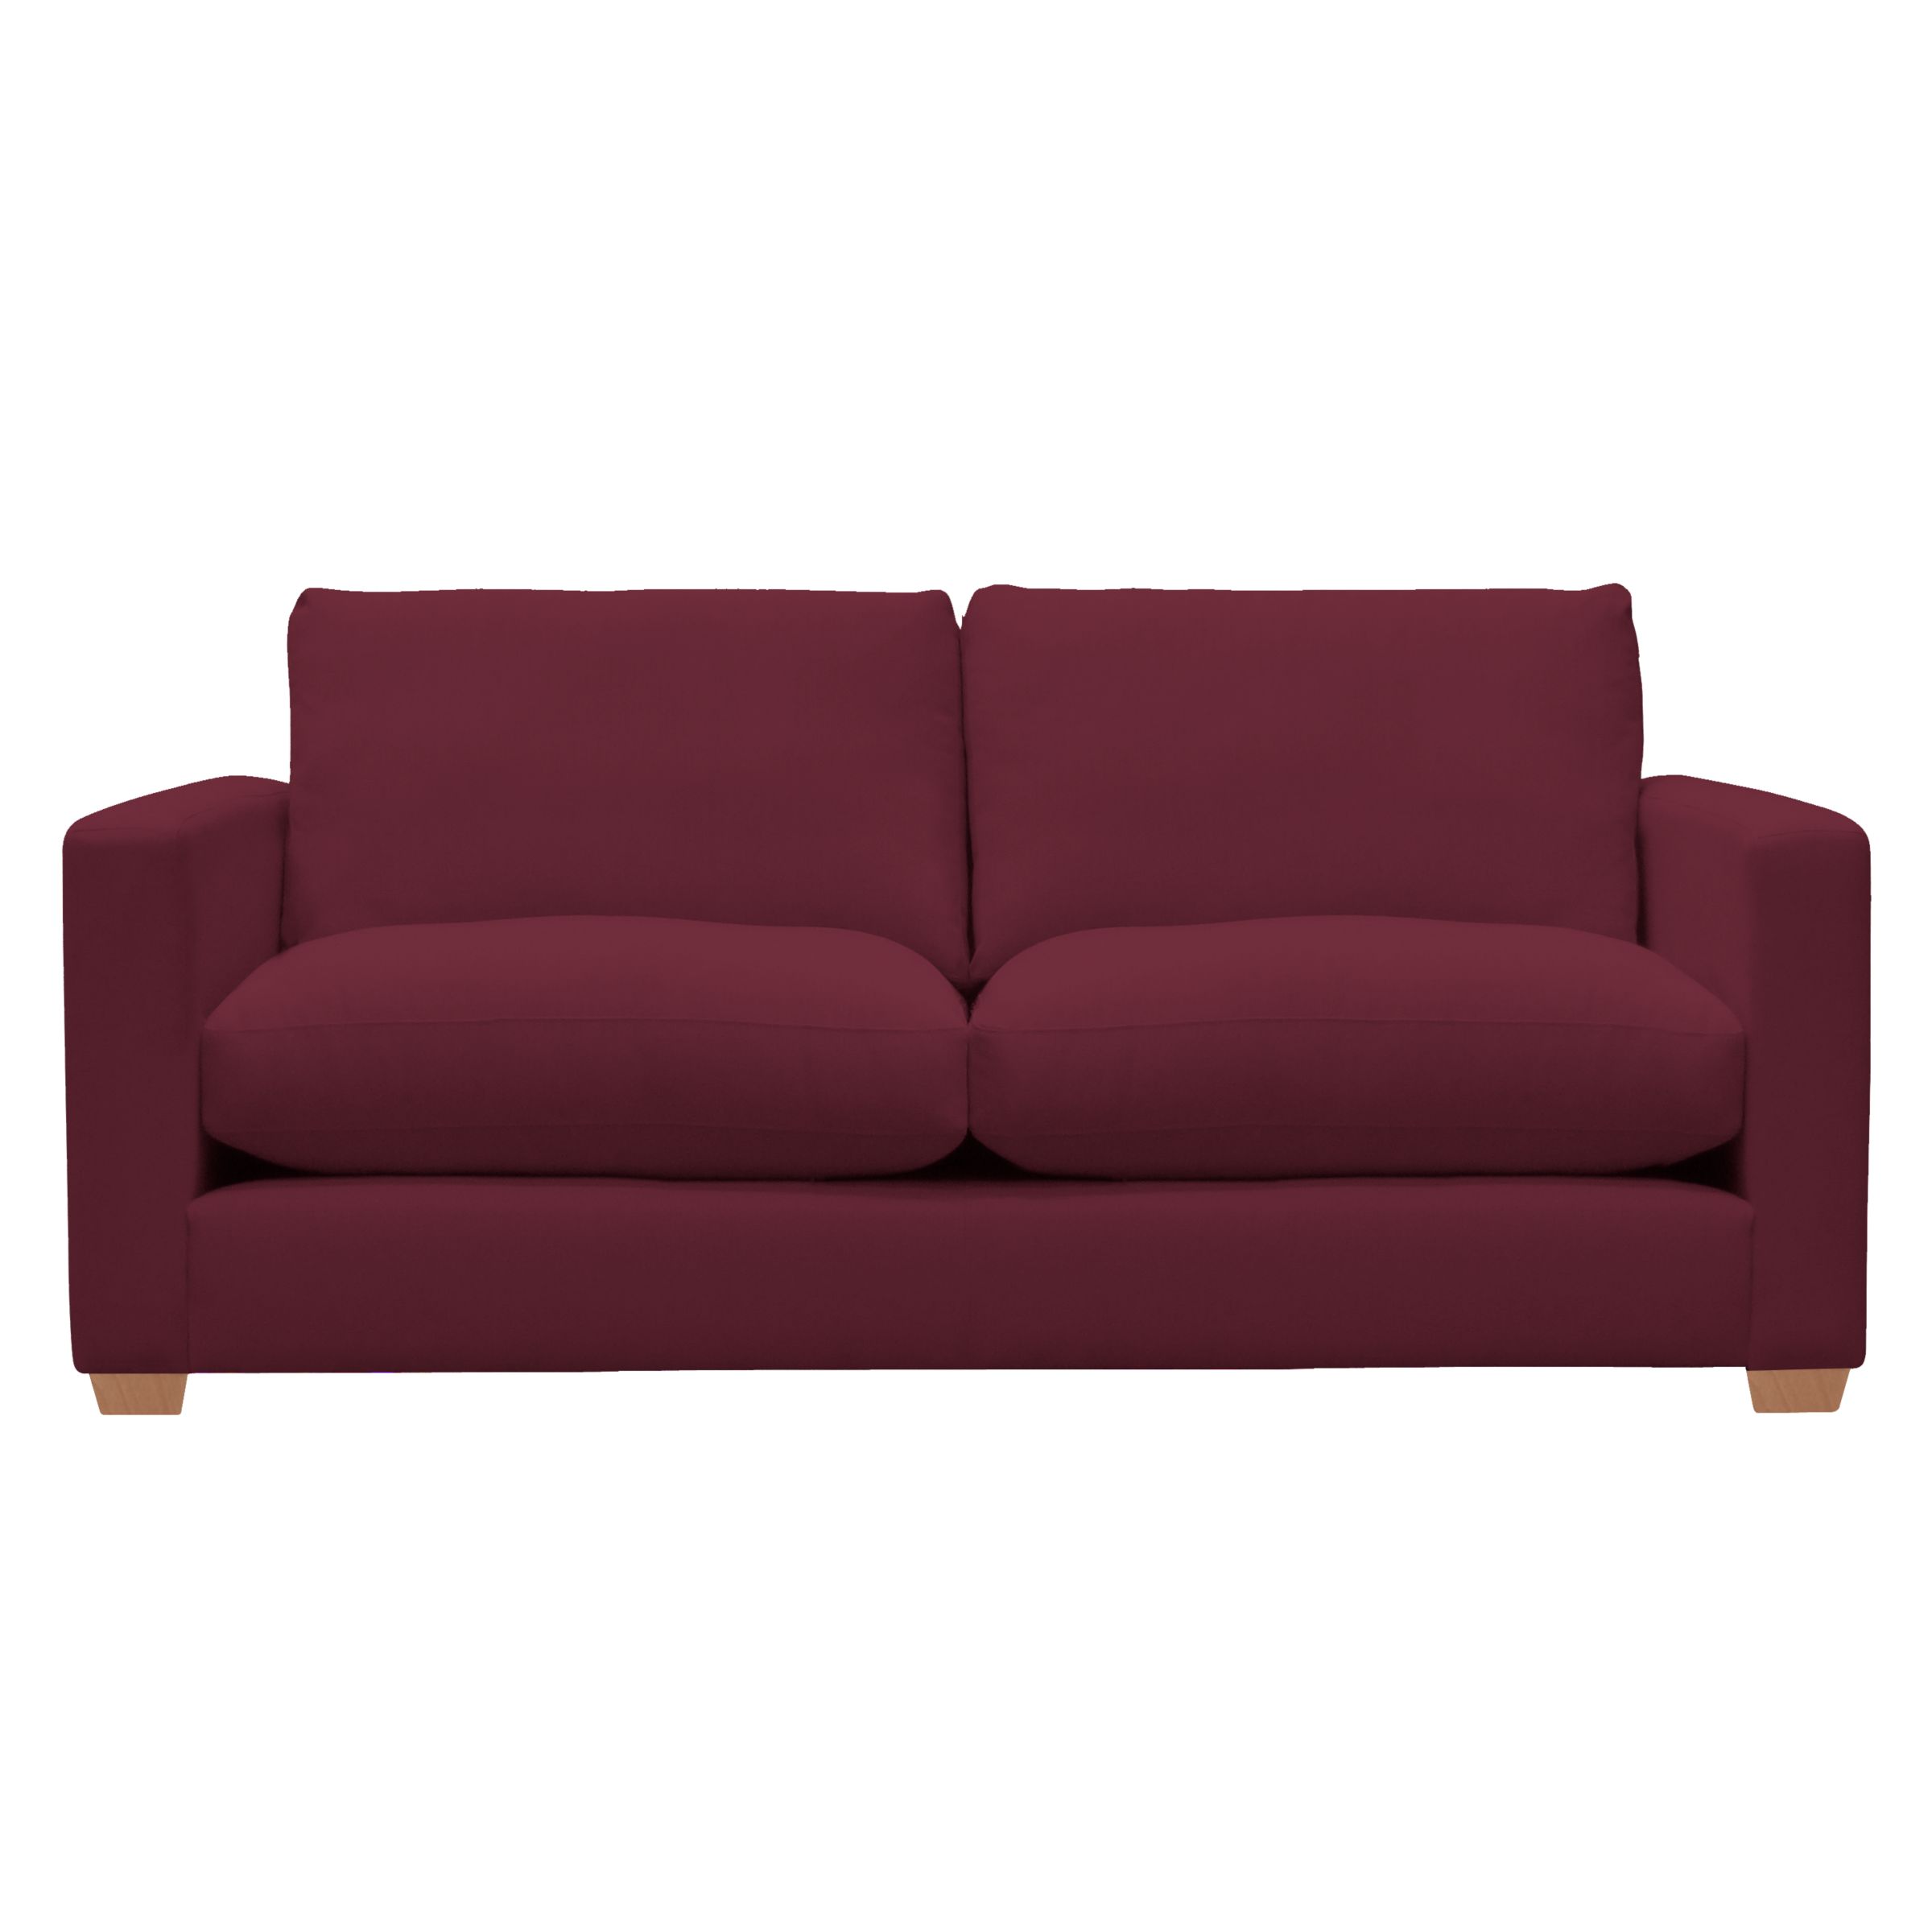 John Lewis Options Slim Arm Large Sofa, Linley Mulberry, width 187cm